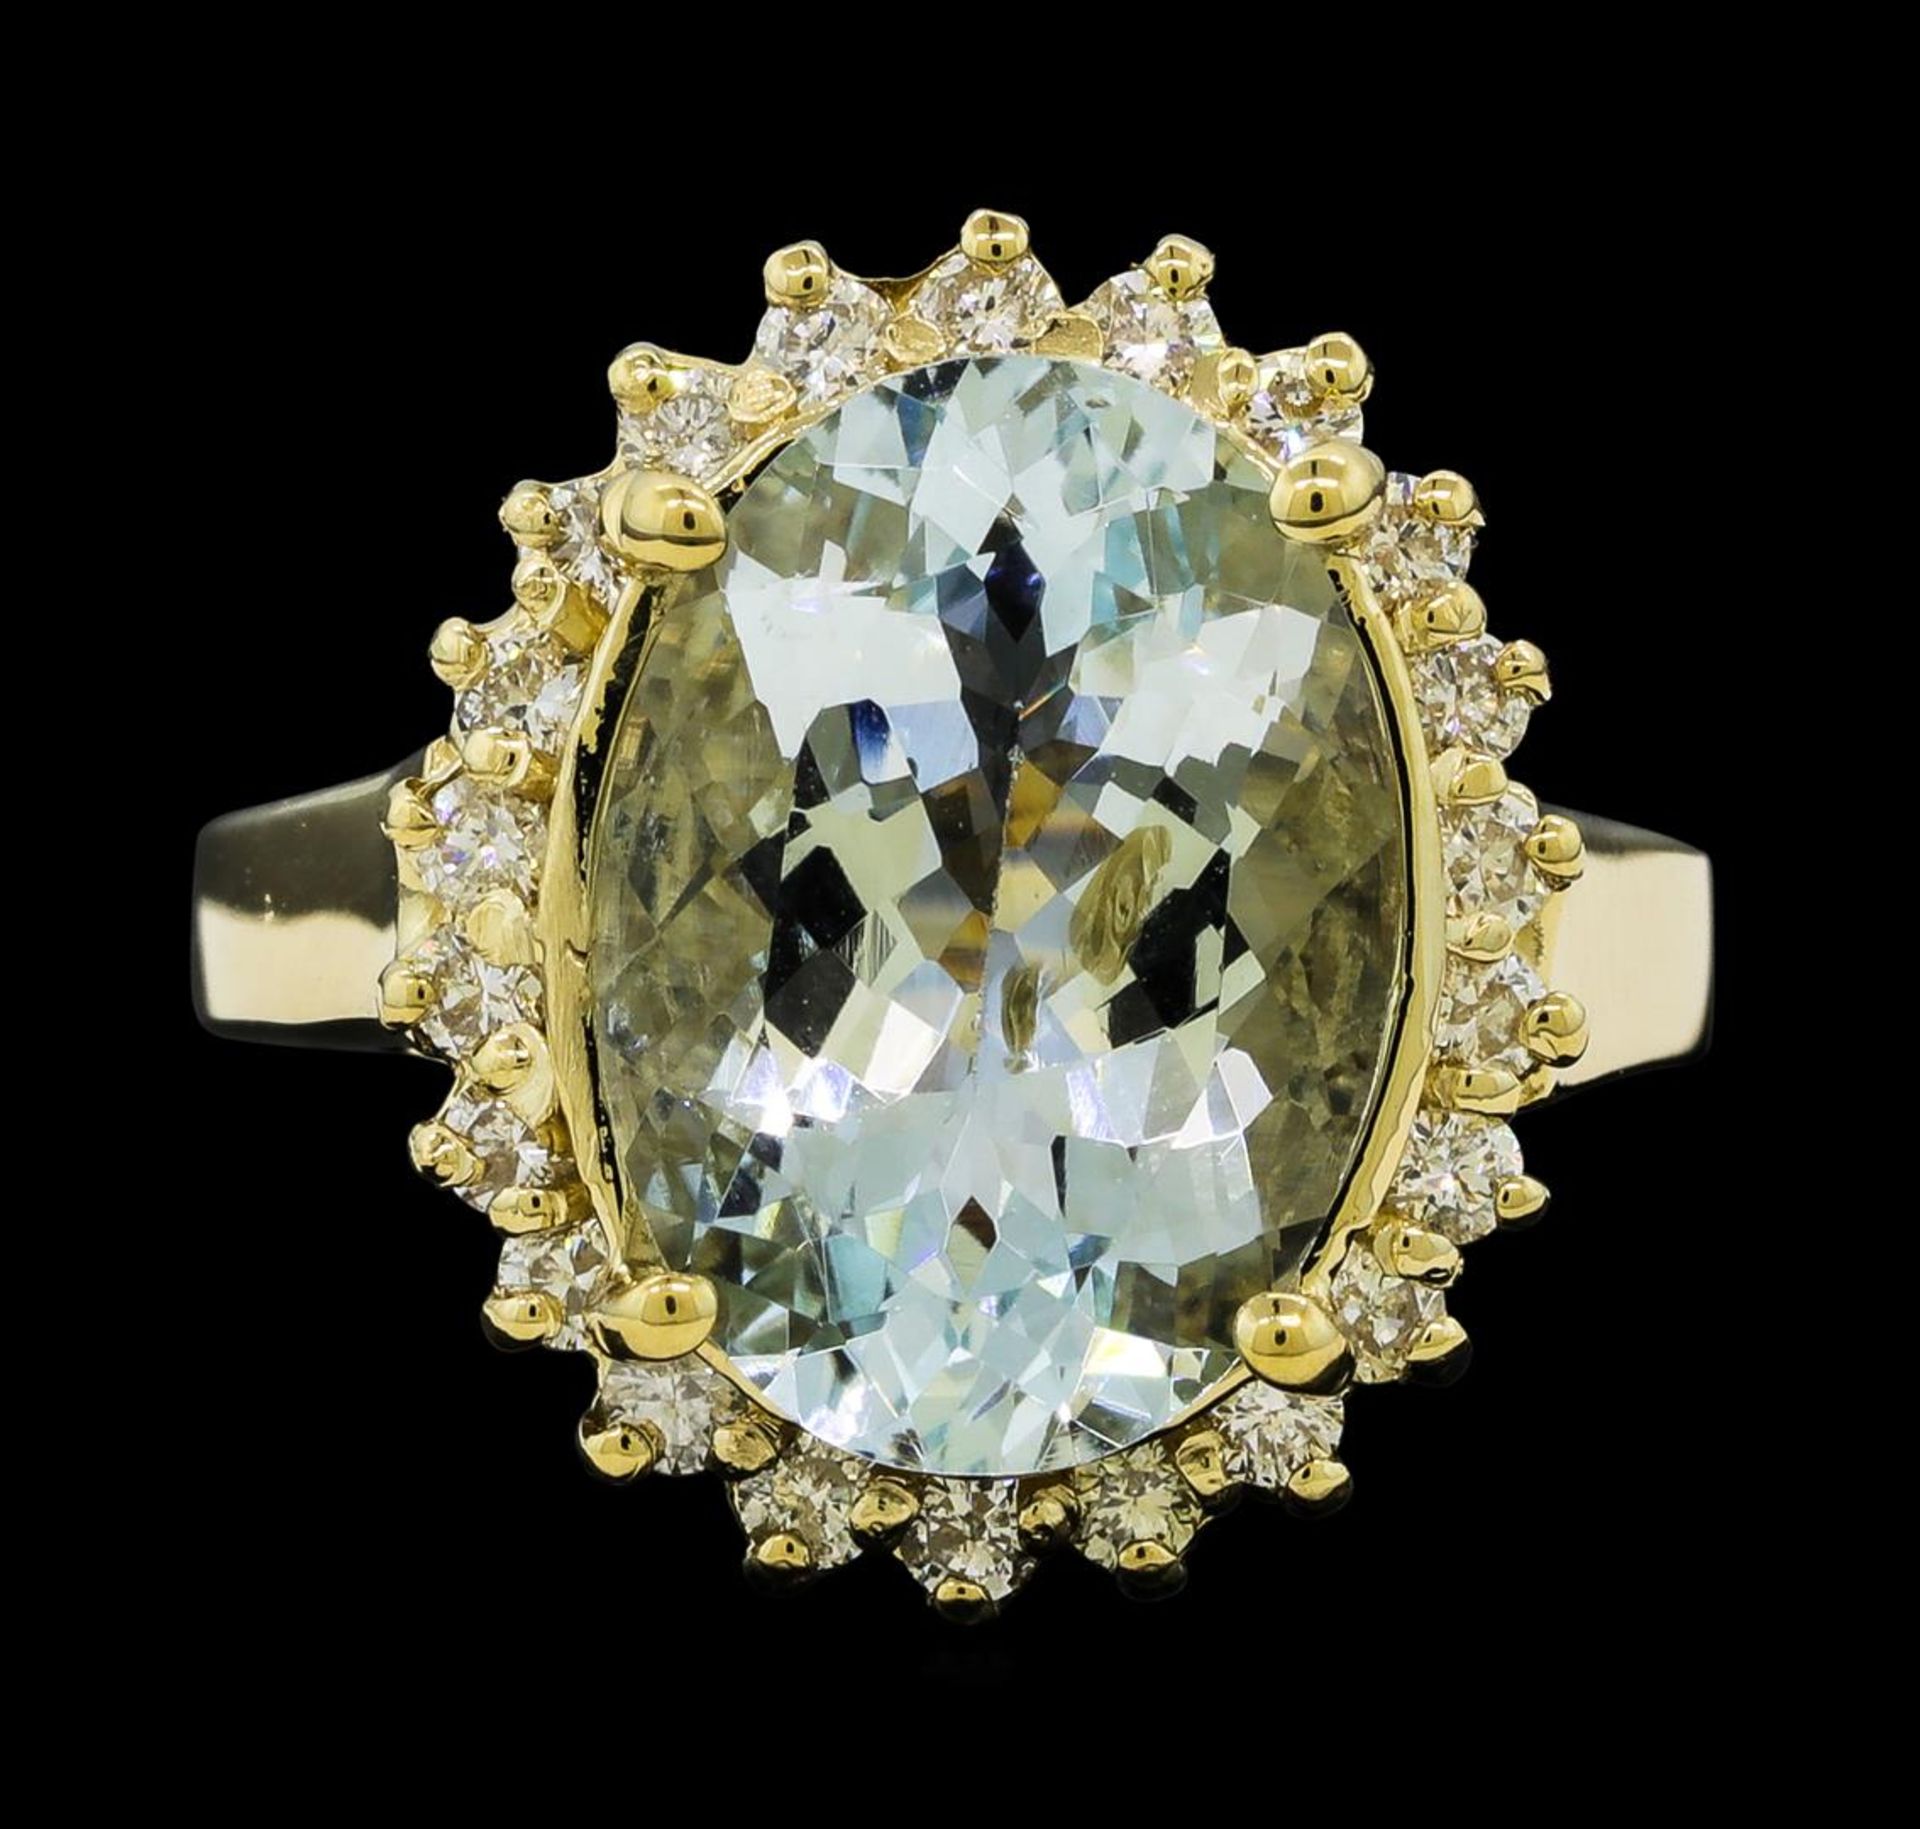 4.45 ctw Aquamarine and Diamond Ring - 14KT Yellow Gold - Image 2 of 4